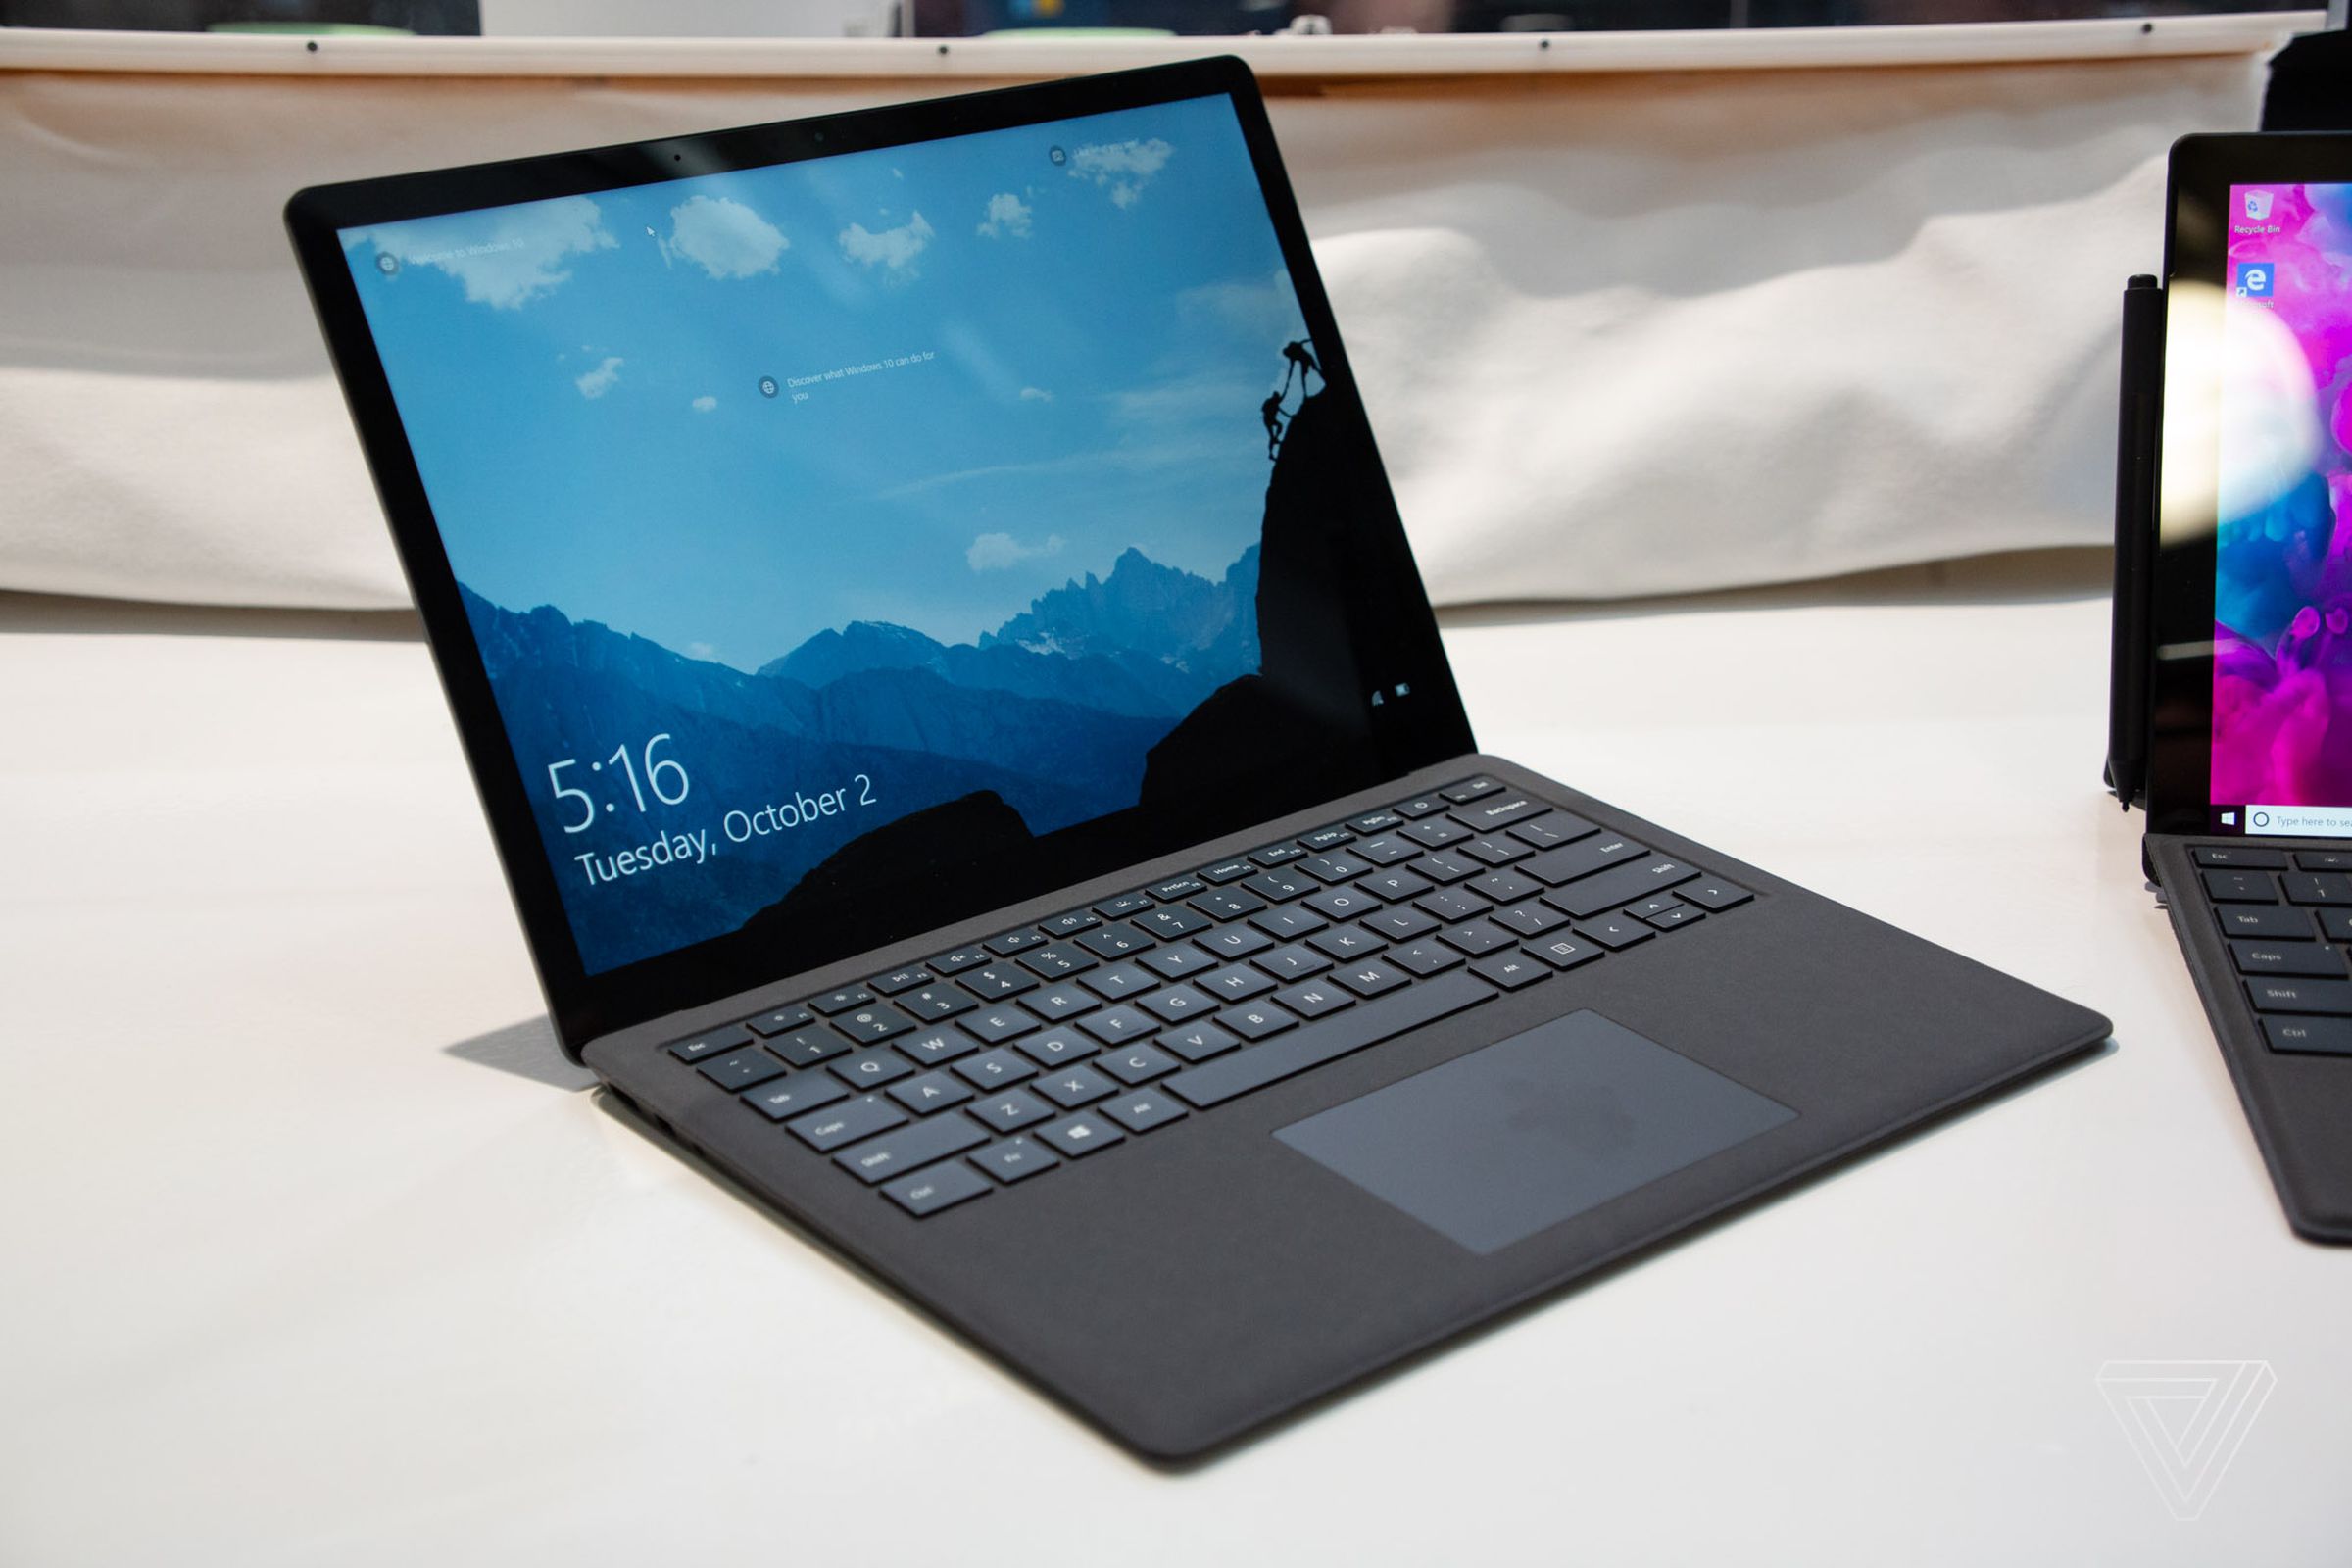 Microsoft’s new Surface Laptop 2